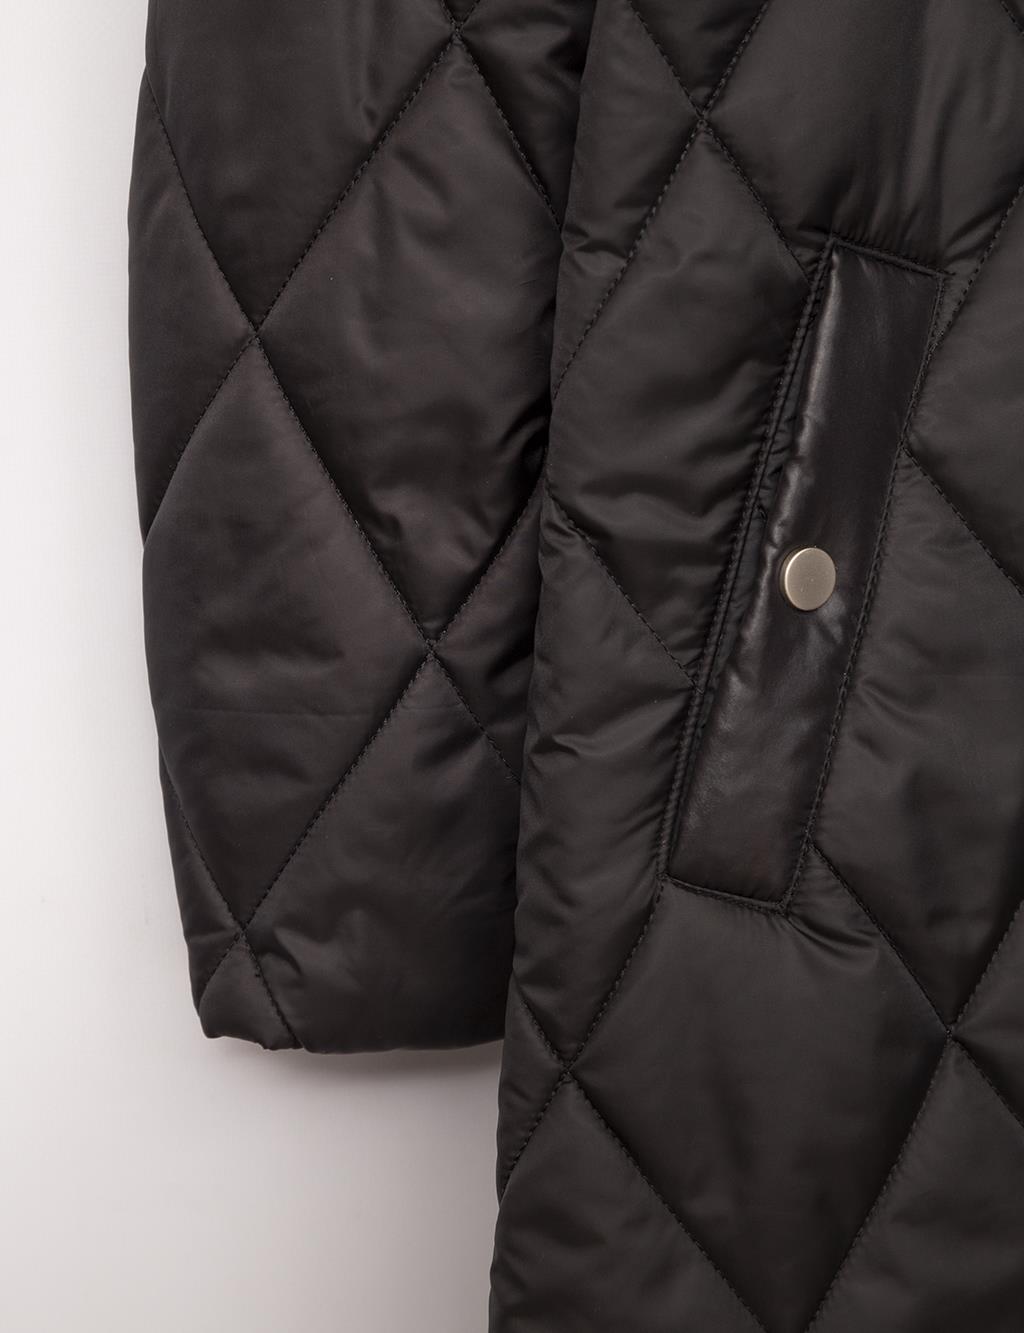 Diamond Patterned Hooded Coat Black